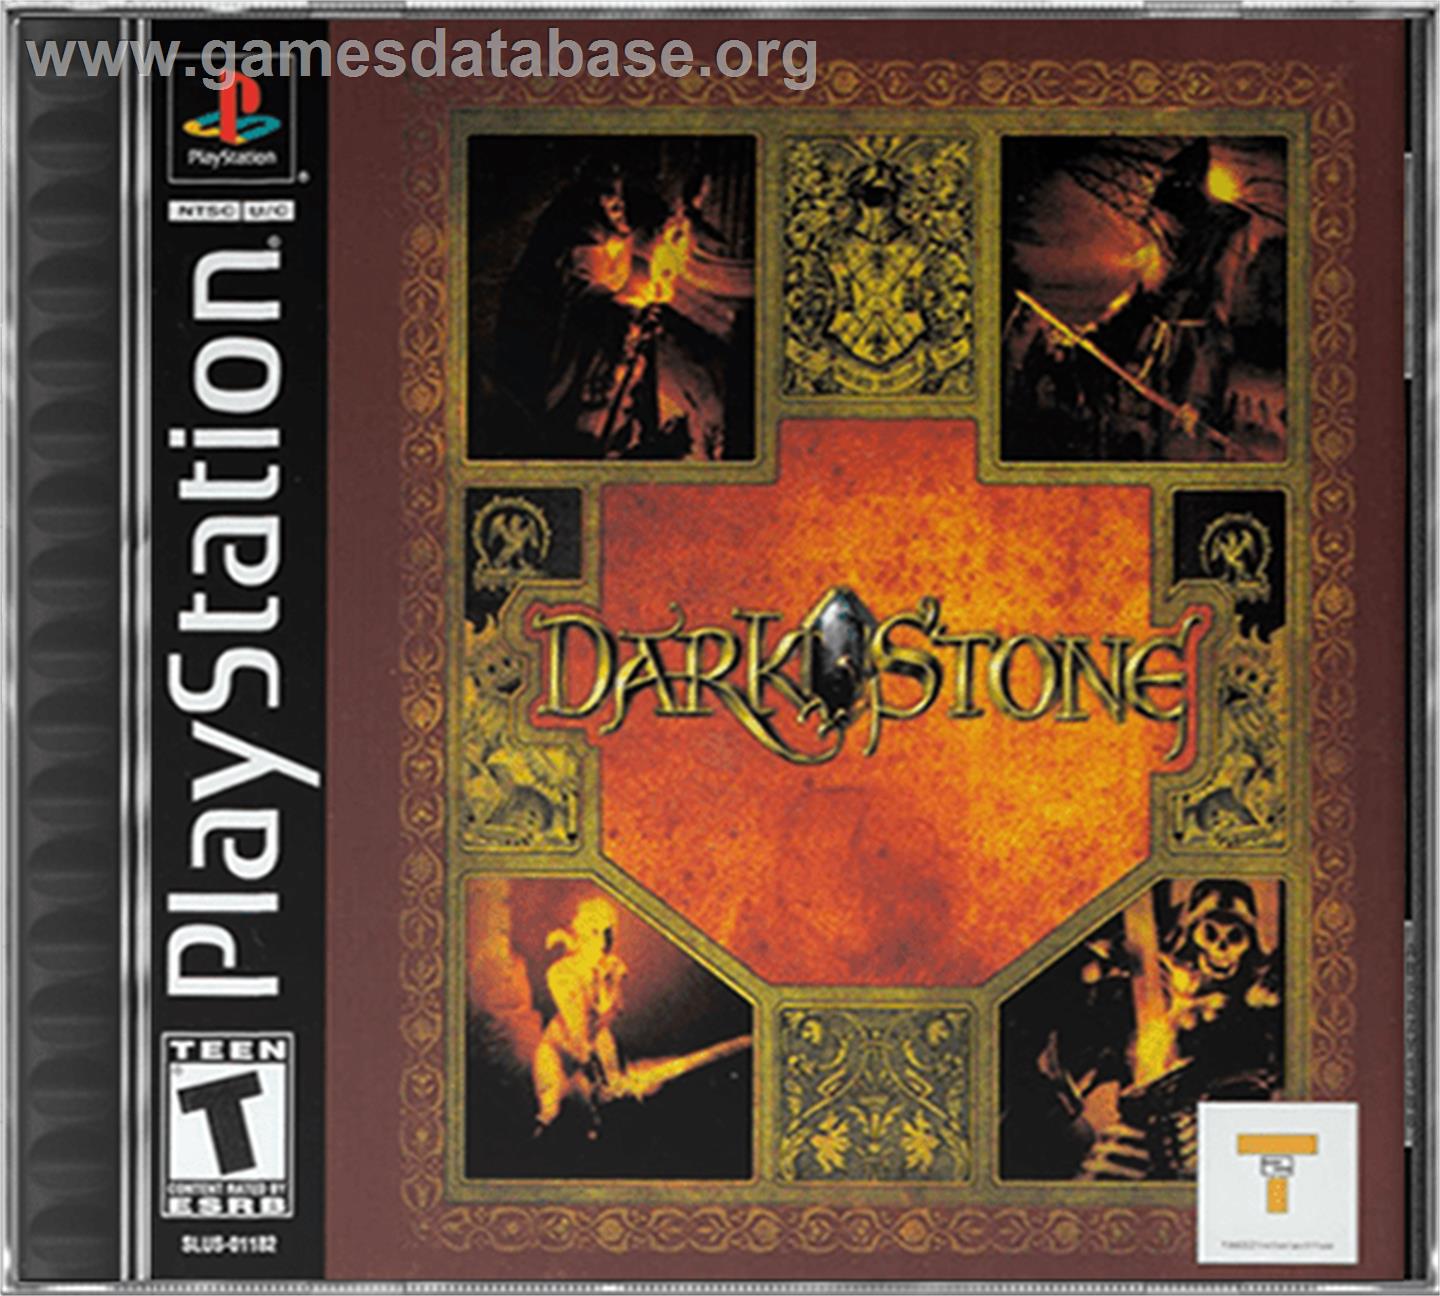 Darkstone - Sony Playstation - Artwork - Box